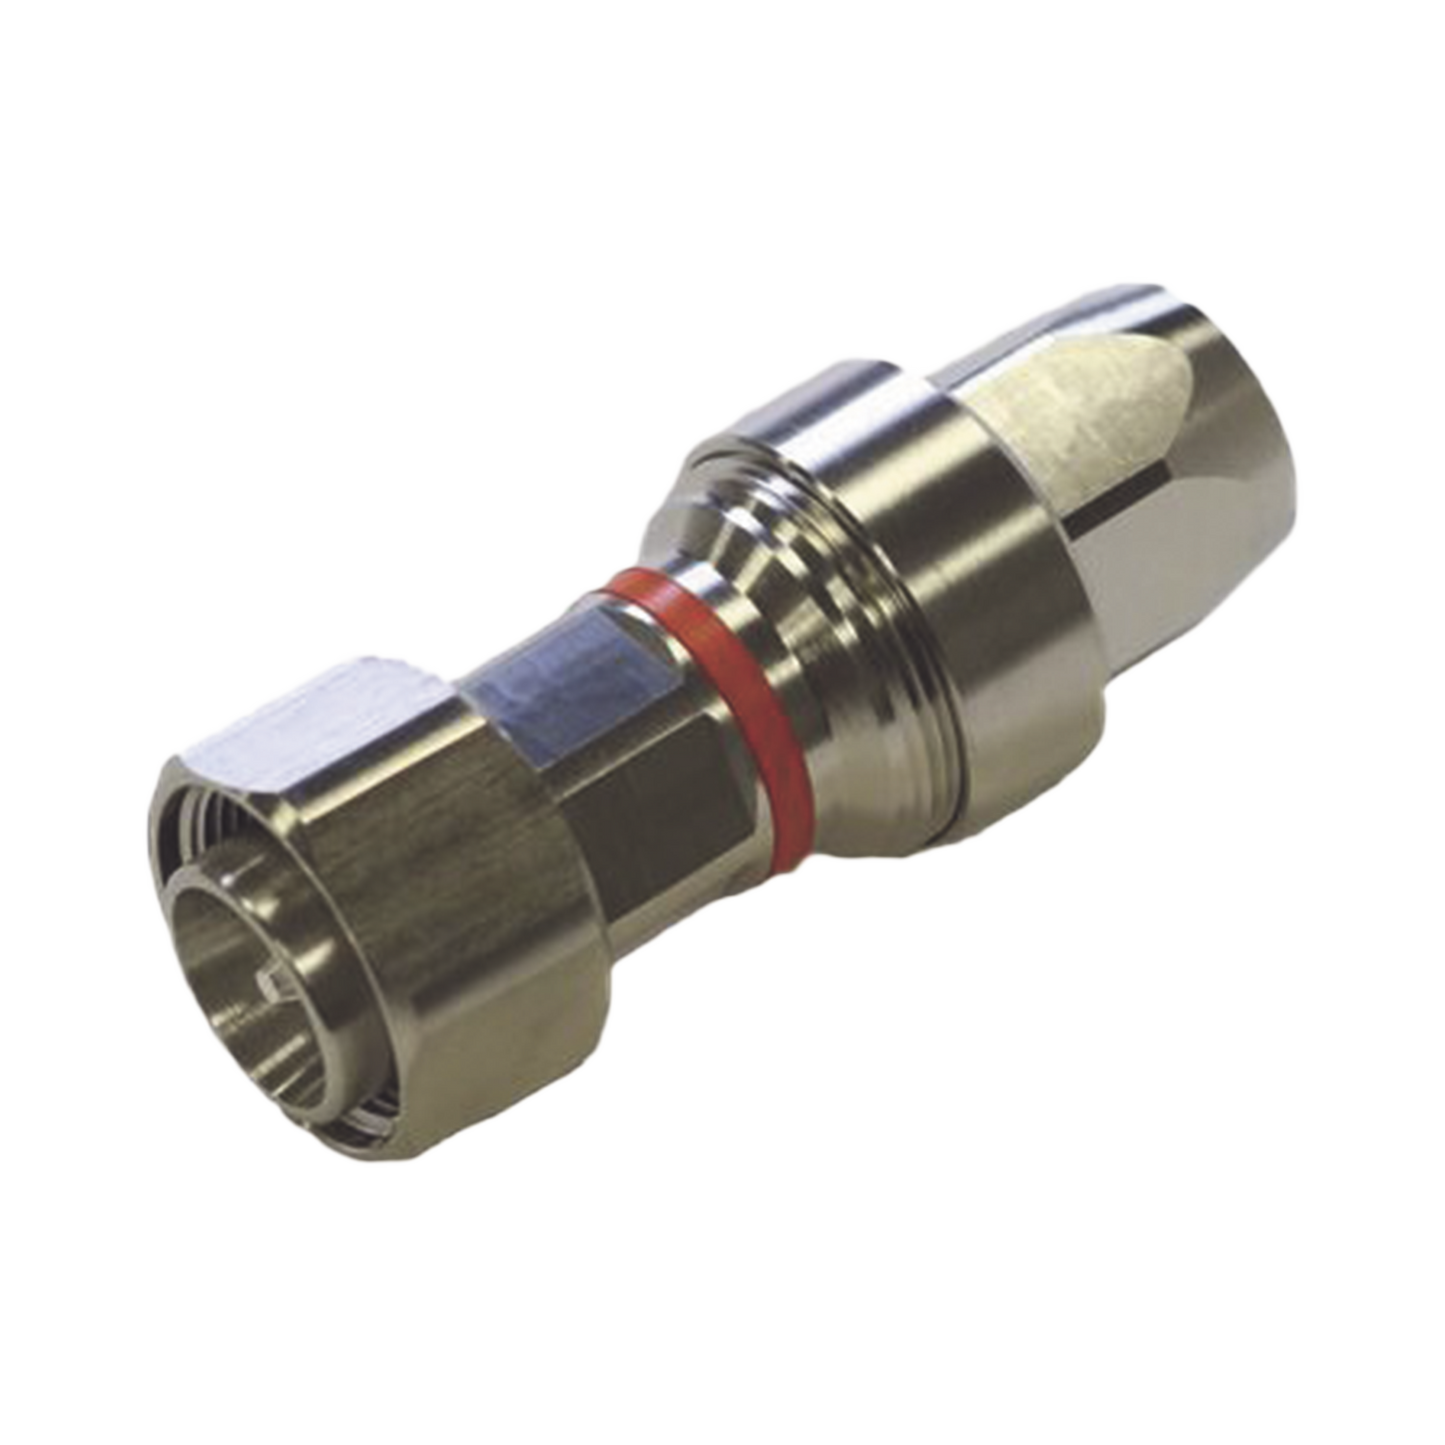 Conector 4.3-10 Macho para Cable FSJ4-50B, Pin Cautivo y Cojinete Expandible, Trimetal/ Plata/ Teflón.